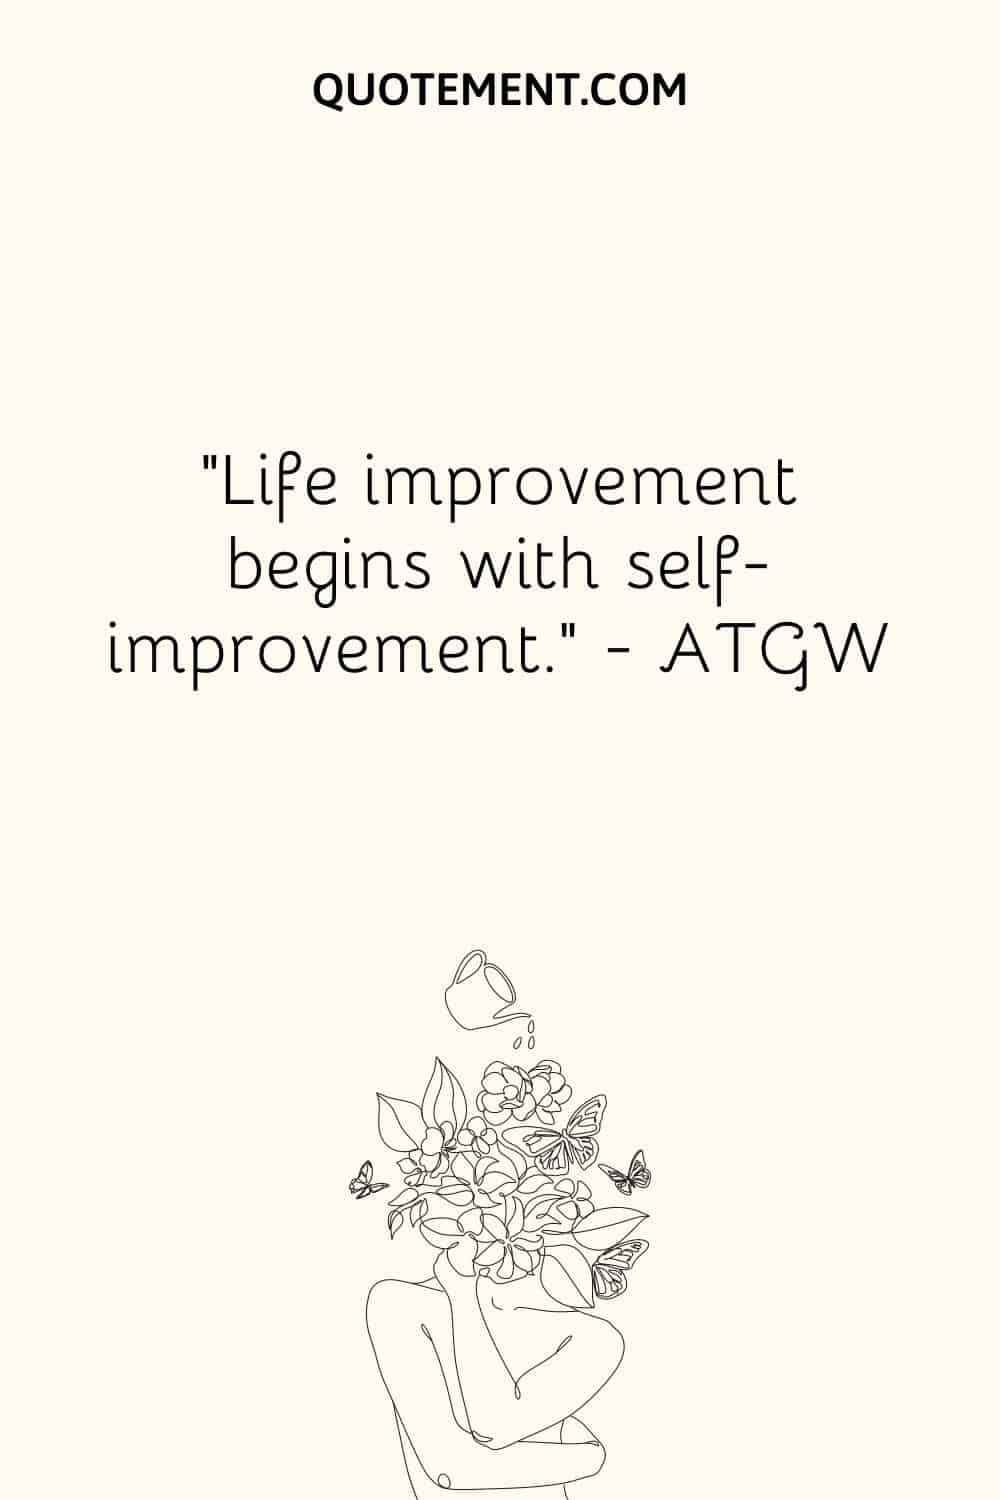 Life improvement begins with self-improvement